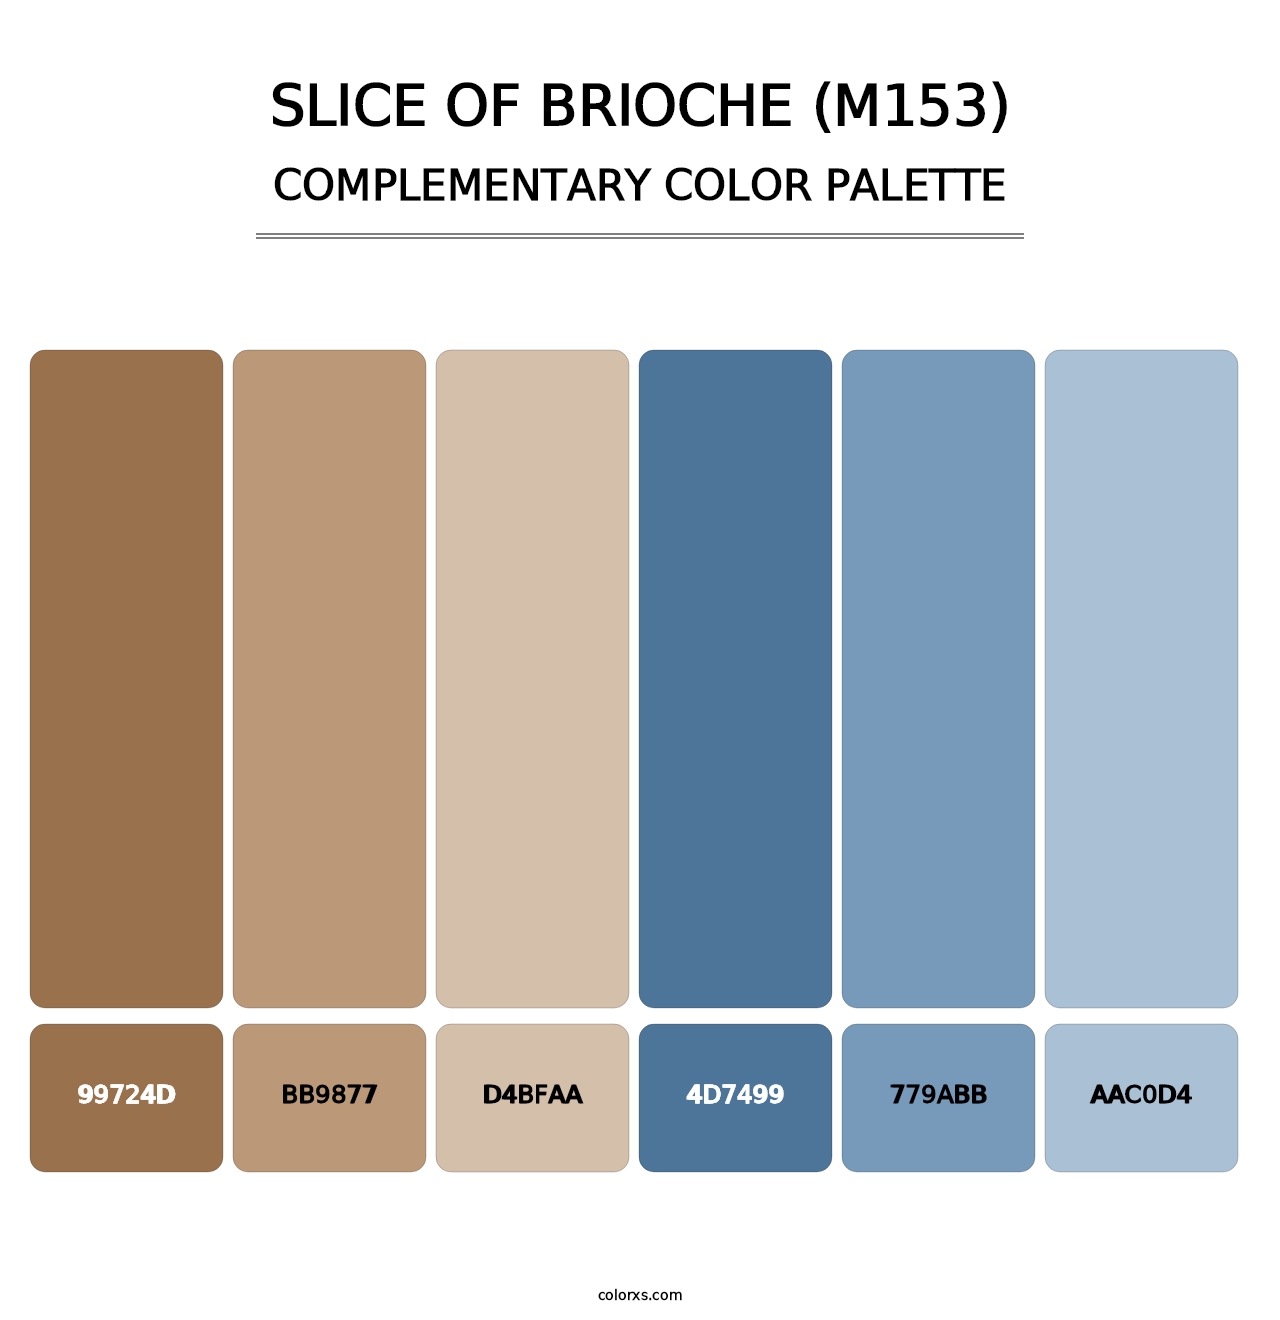 Slice of Brioche (M153) - Complementary Color Palette